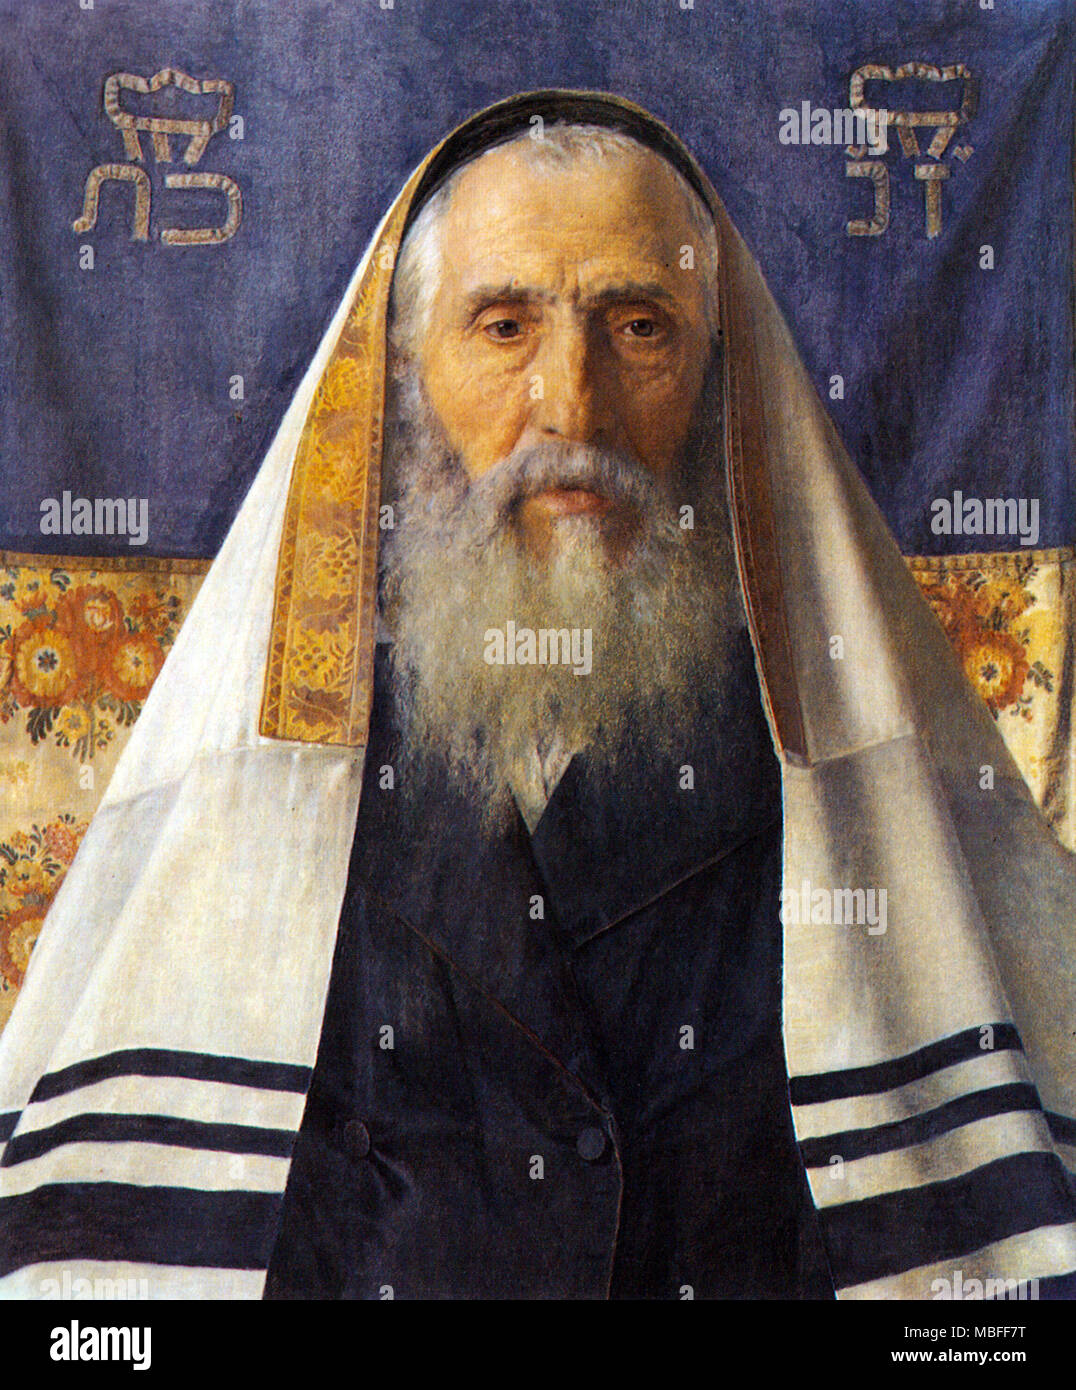 Rabbi with prayer shawl Stock Photo